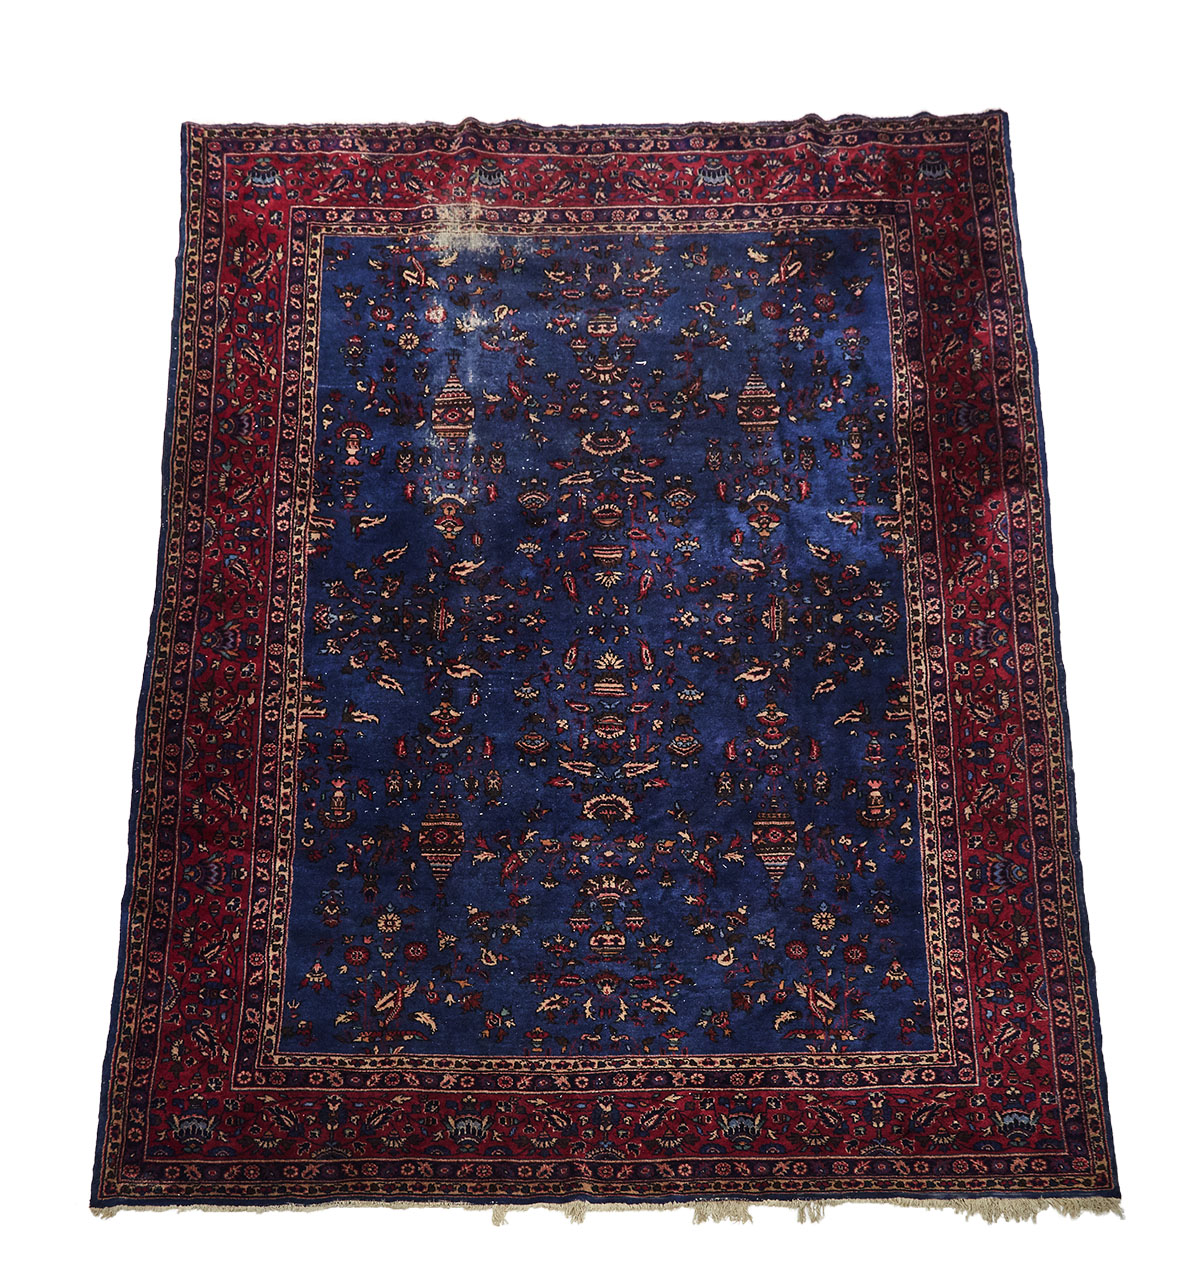 Turkish Sparta Carpet, mid to late 20th century